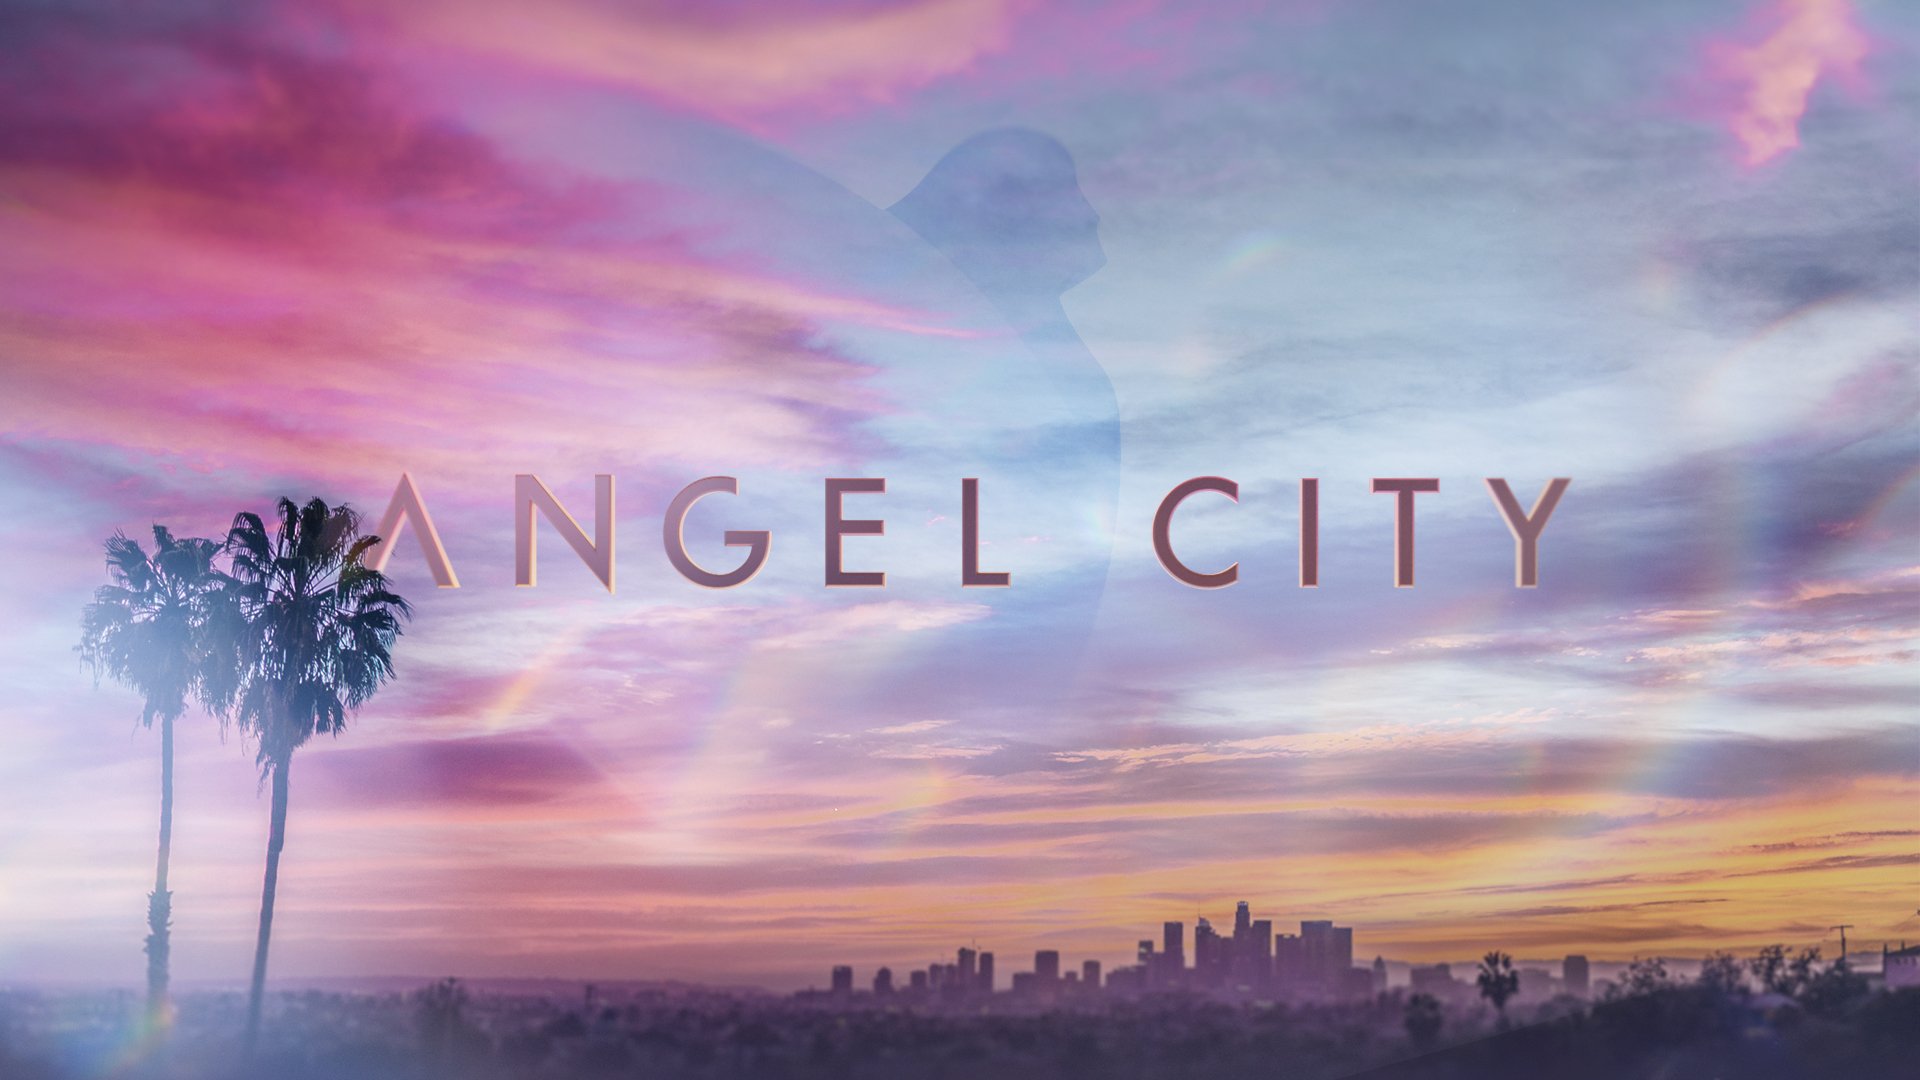 Angel-city-v2-01.jpg